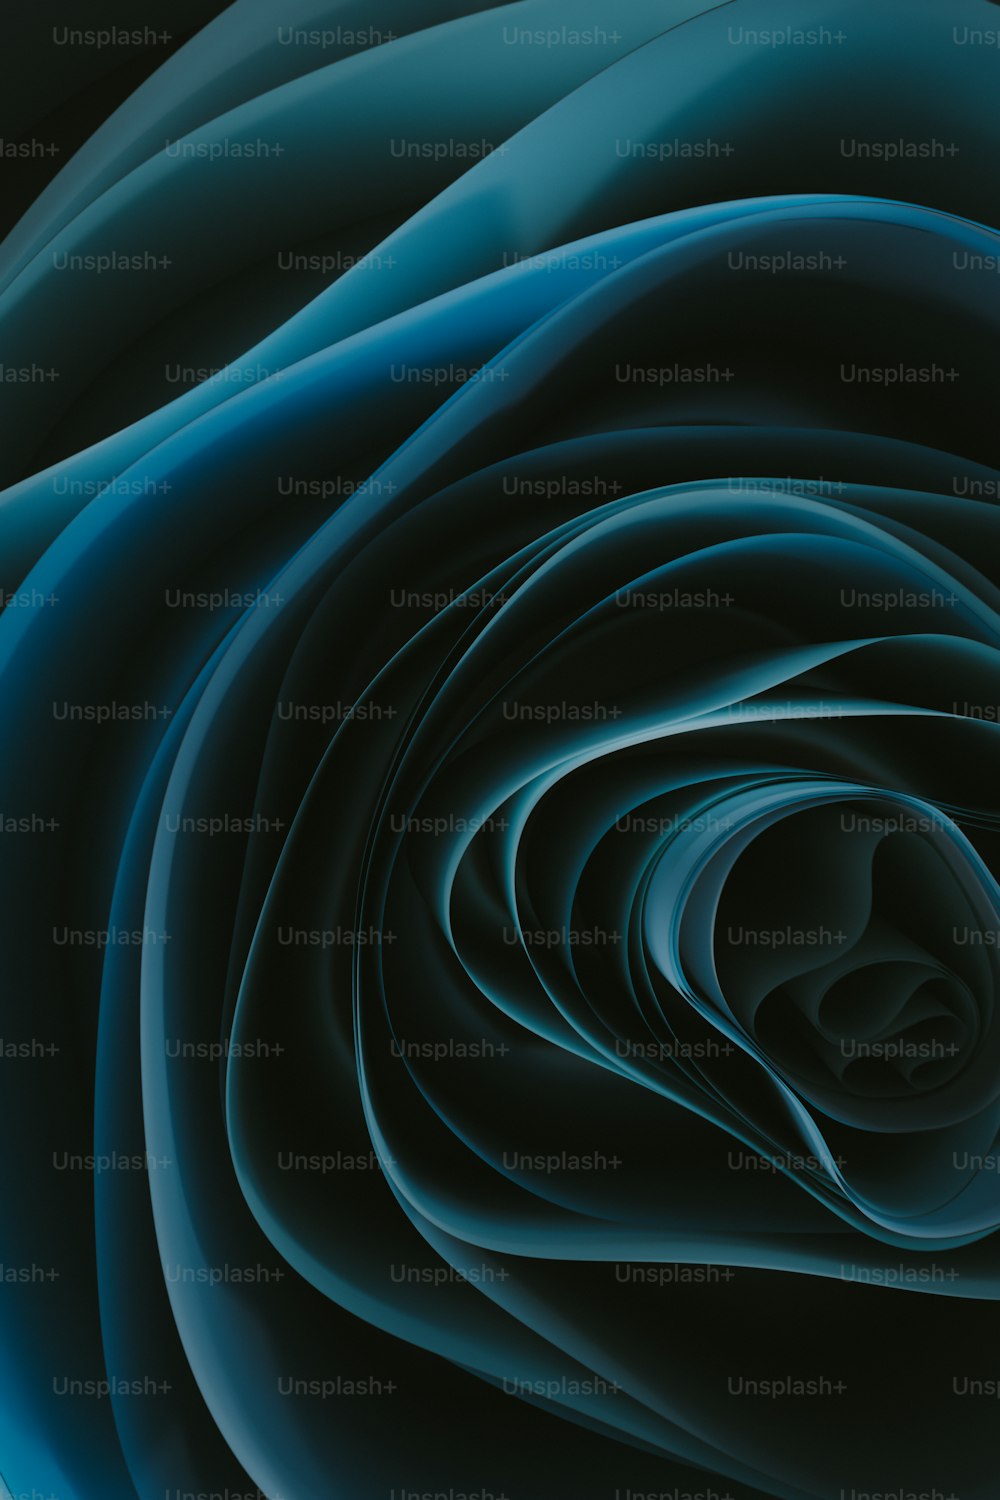 Un'immagine generata al computer di una rosa blu